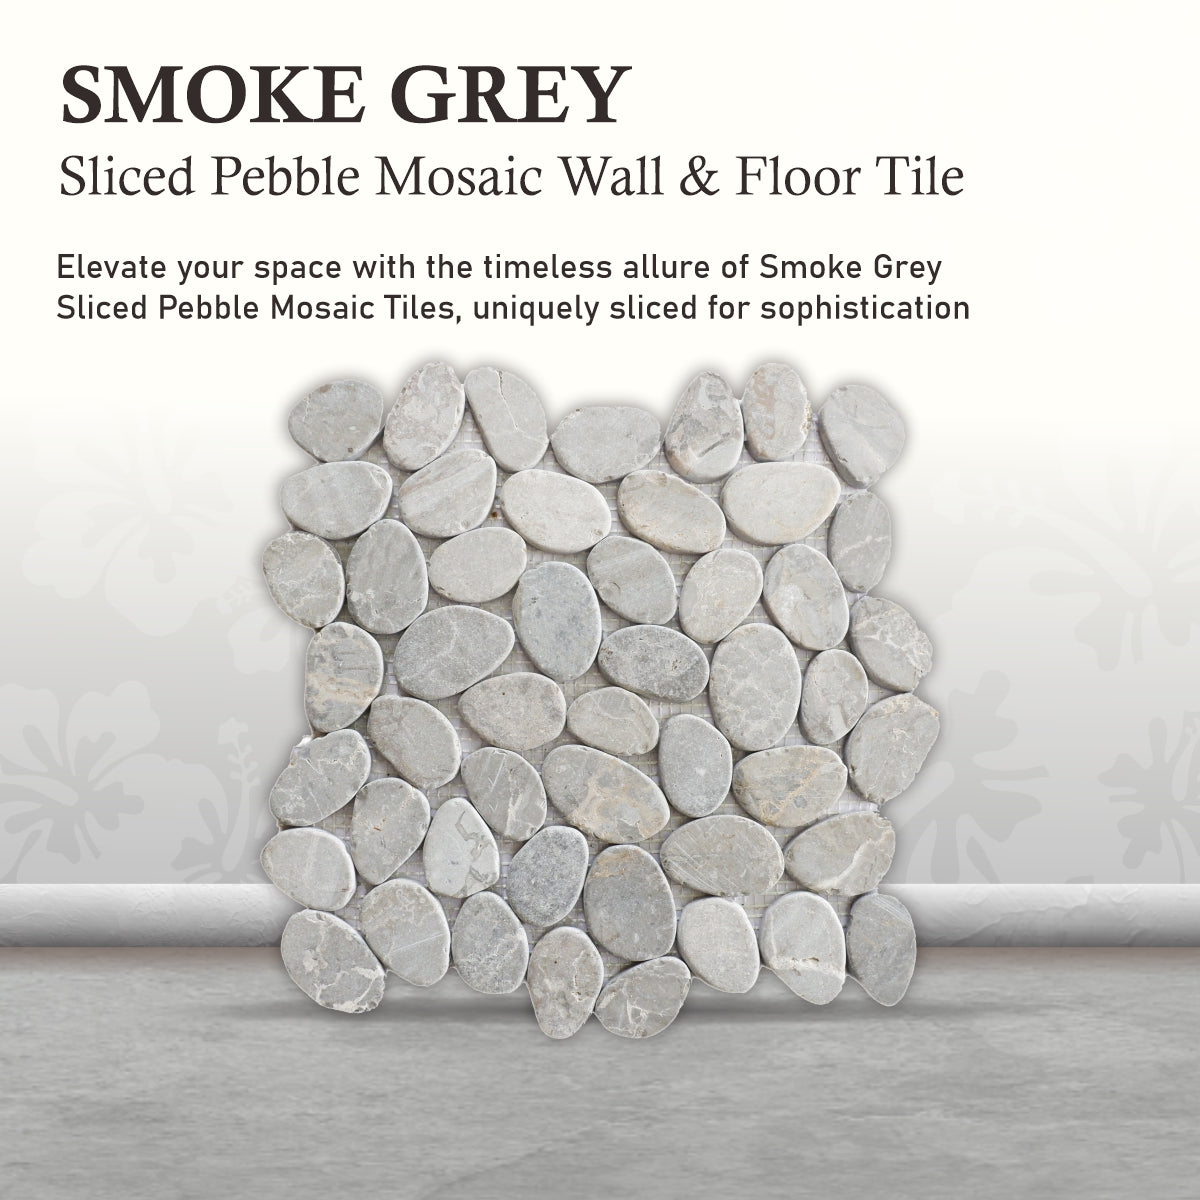 Grey Mosaic Tiles, Smoke Grey Sliced Pebble Mosaic Wall & Floor Tile